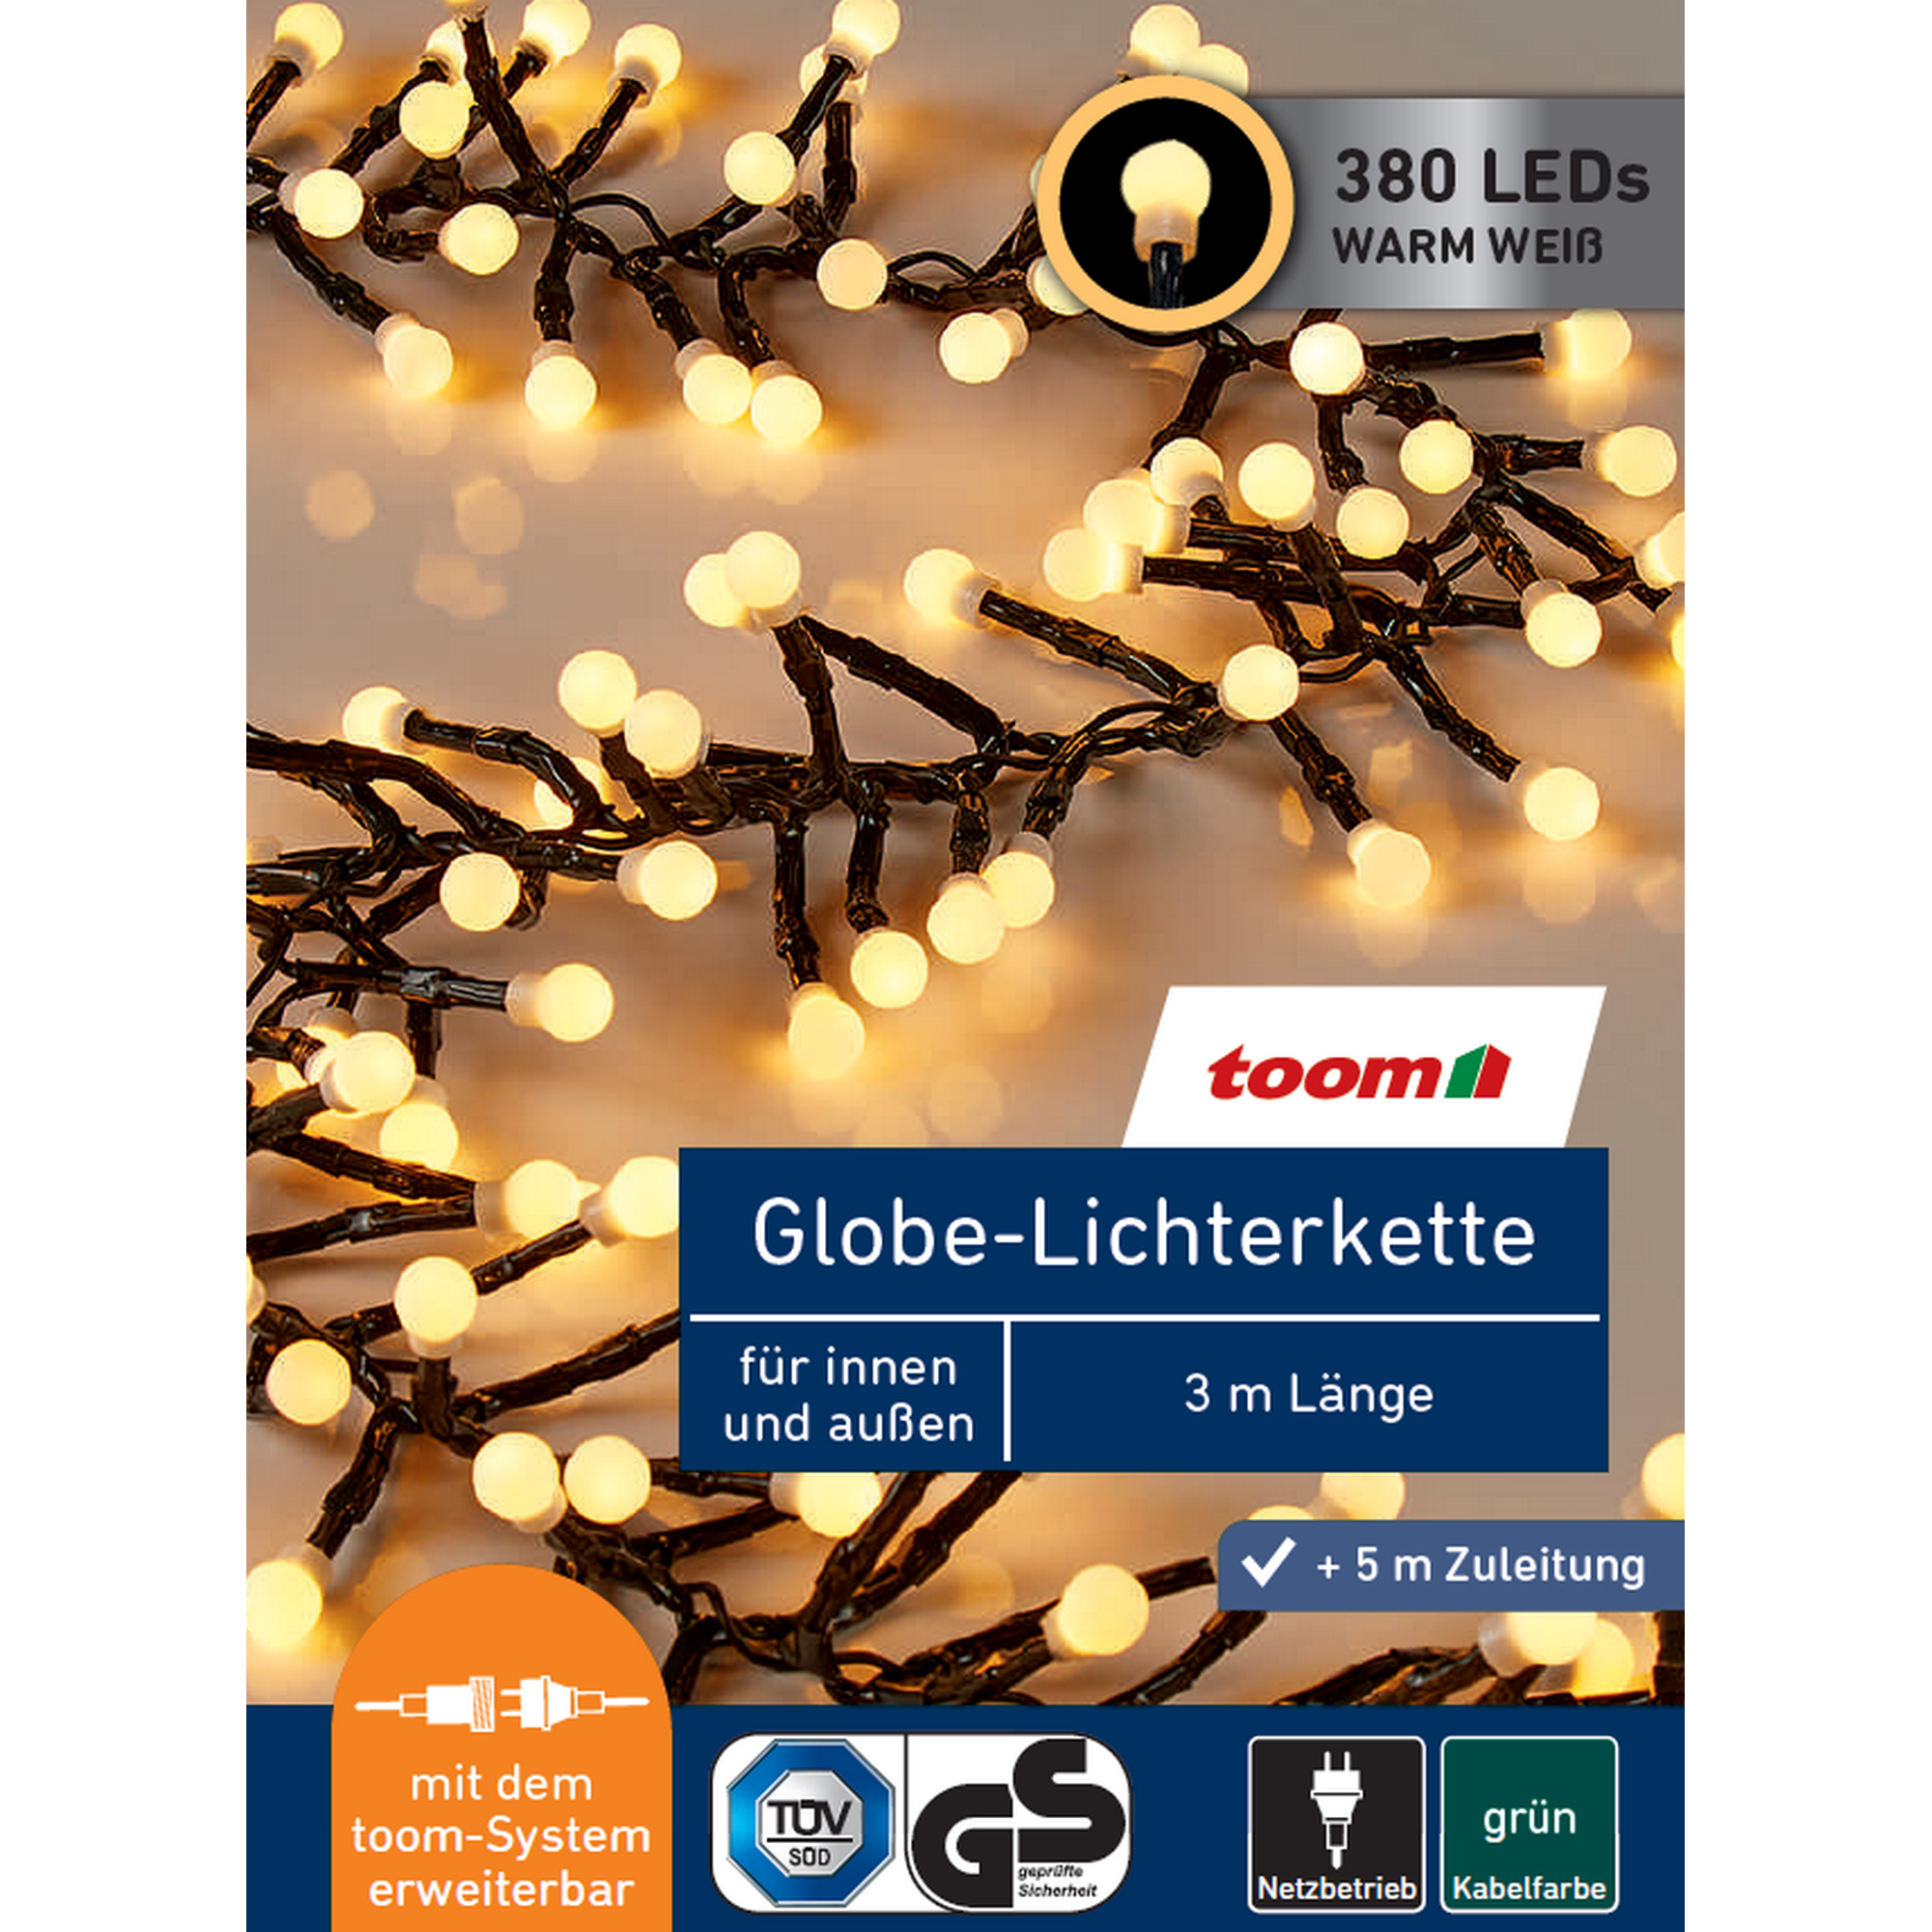 LED-Globe-Lichterkette 380 LEDs warmweiß 300 cm + product picture